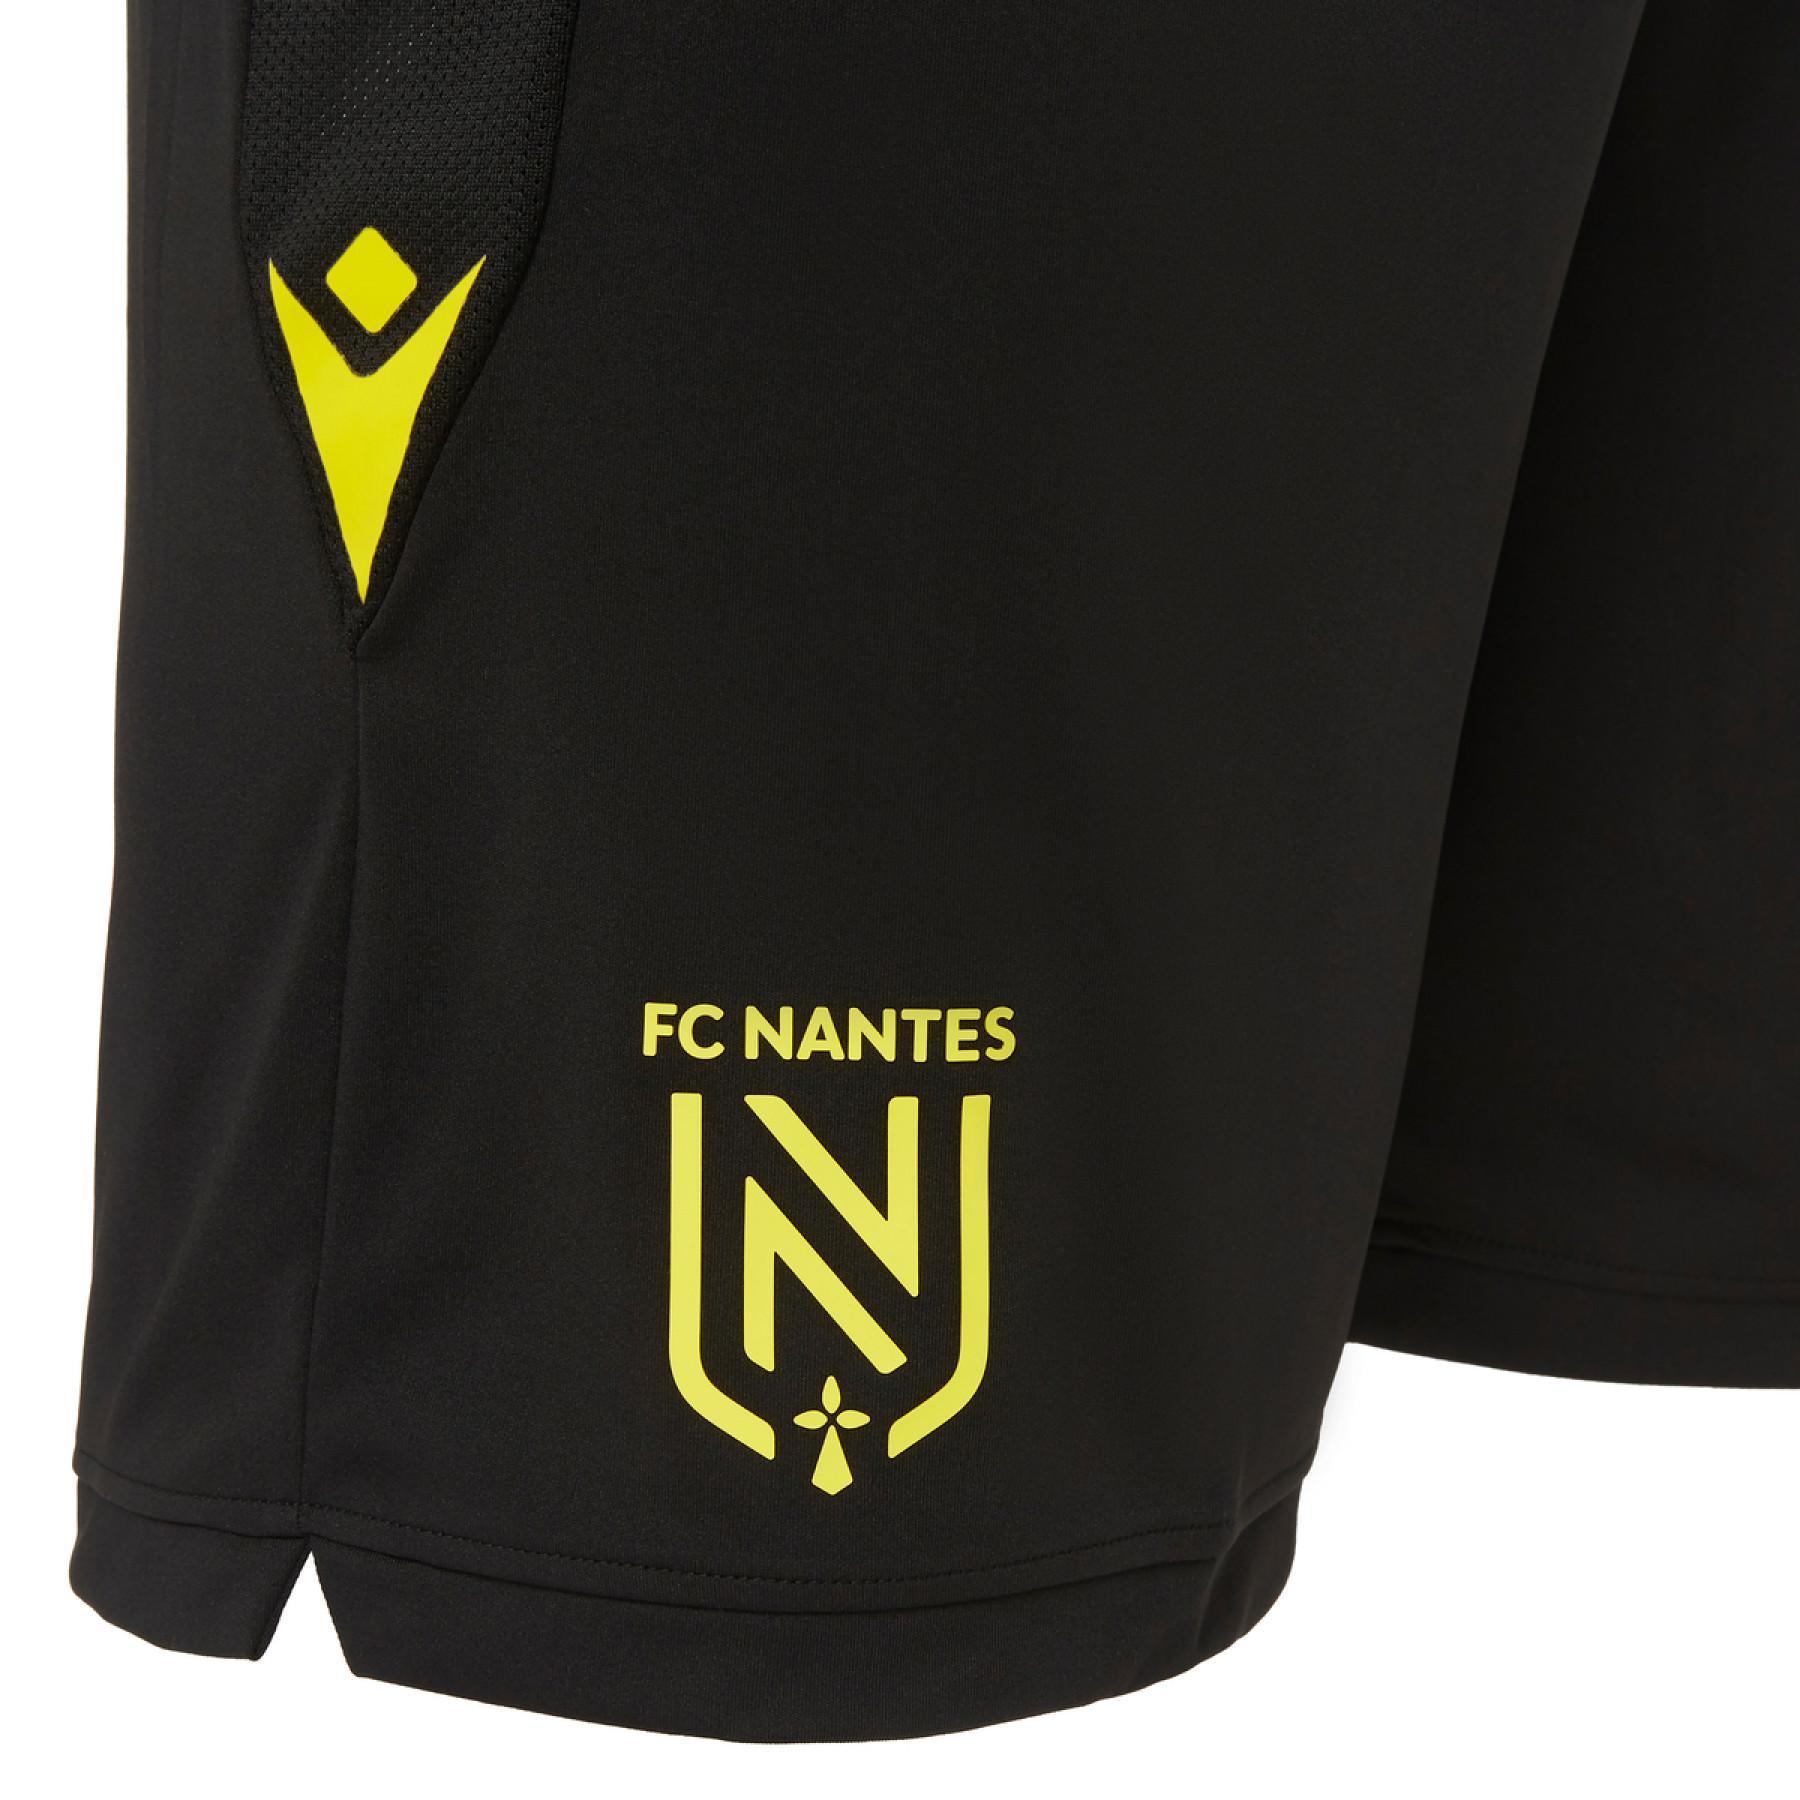 Outdoor shorts FC Nantes 2020/21